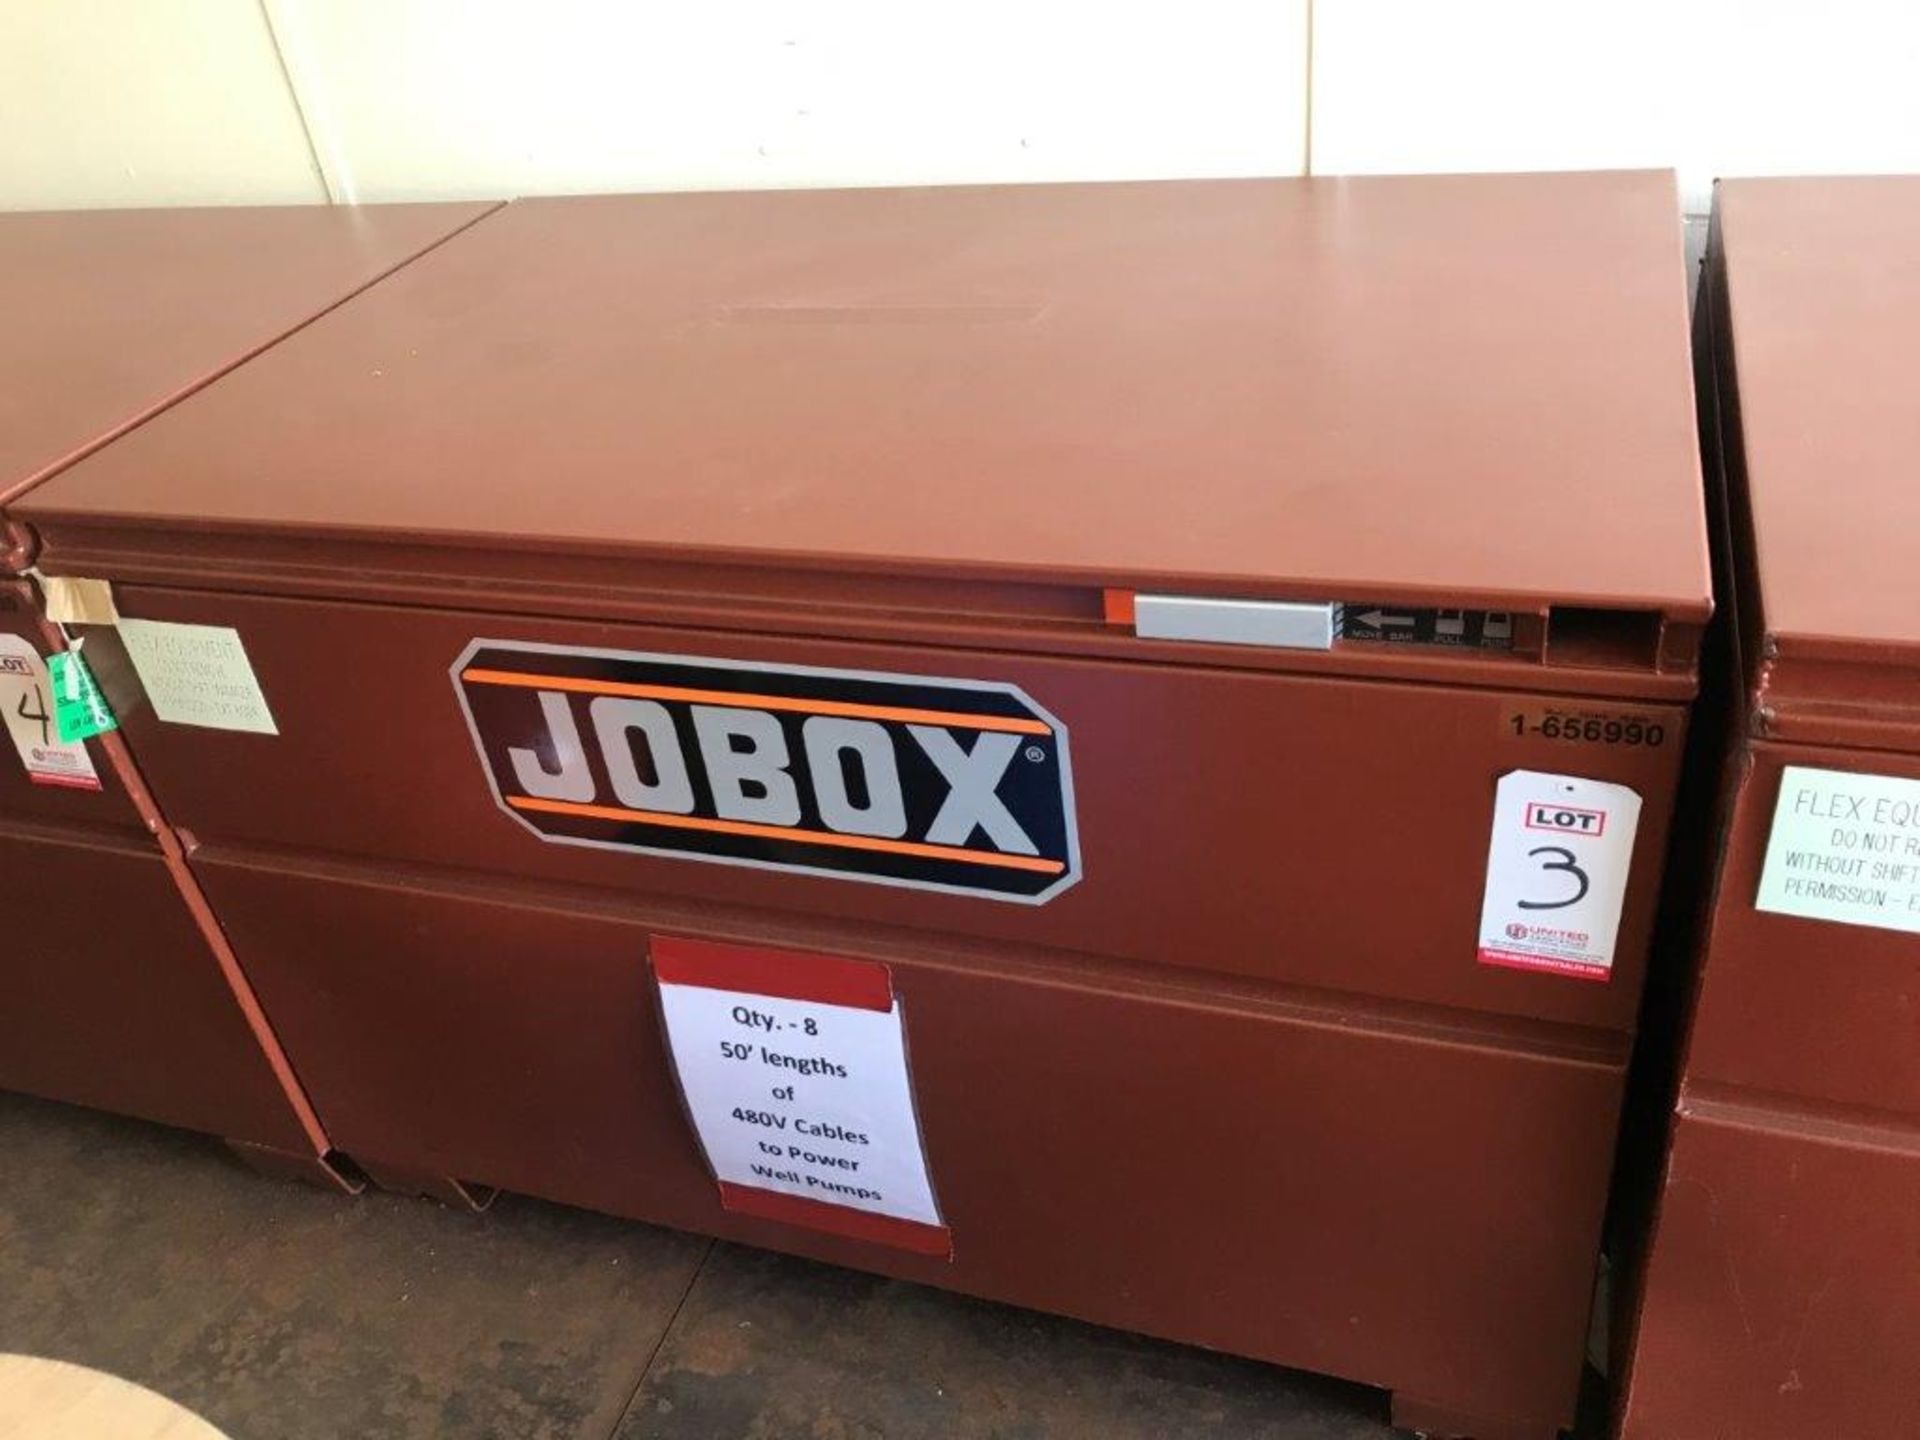 JOBOX, MODEL 1-656990, 48" X 30" X 30" DEEP (LOCATION: FLEX CONTAINER)